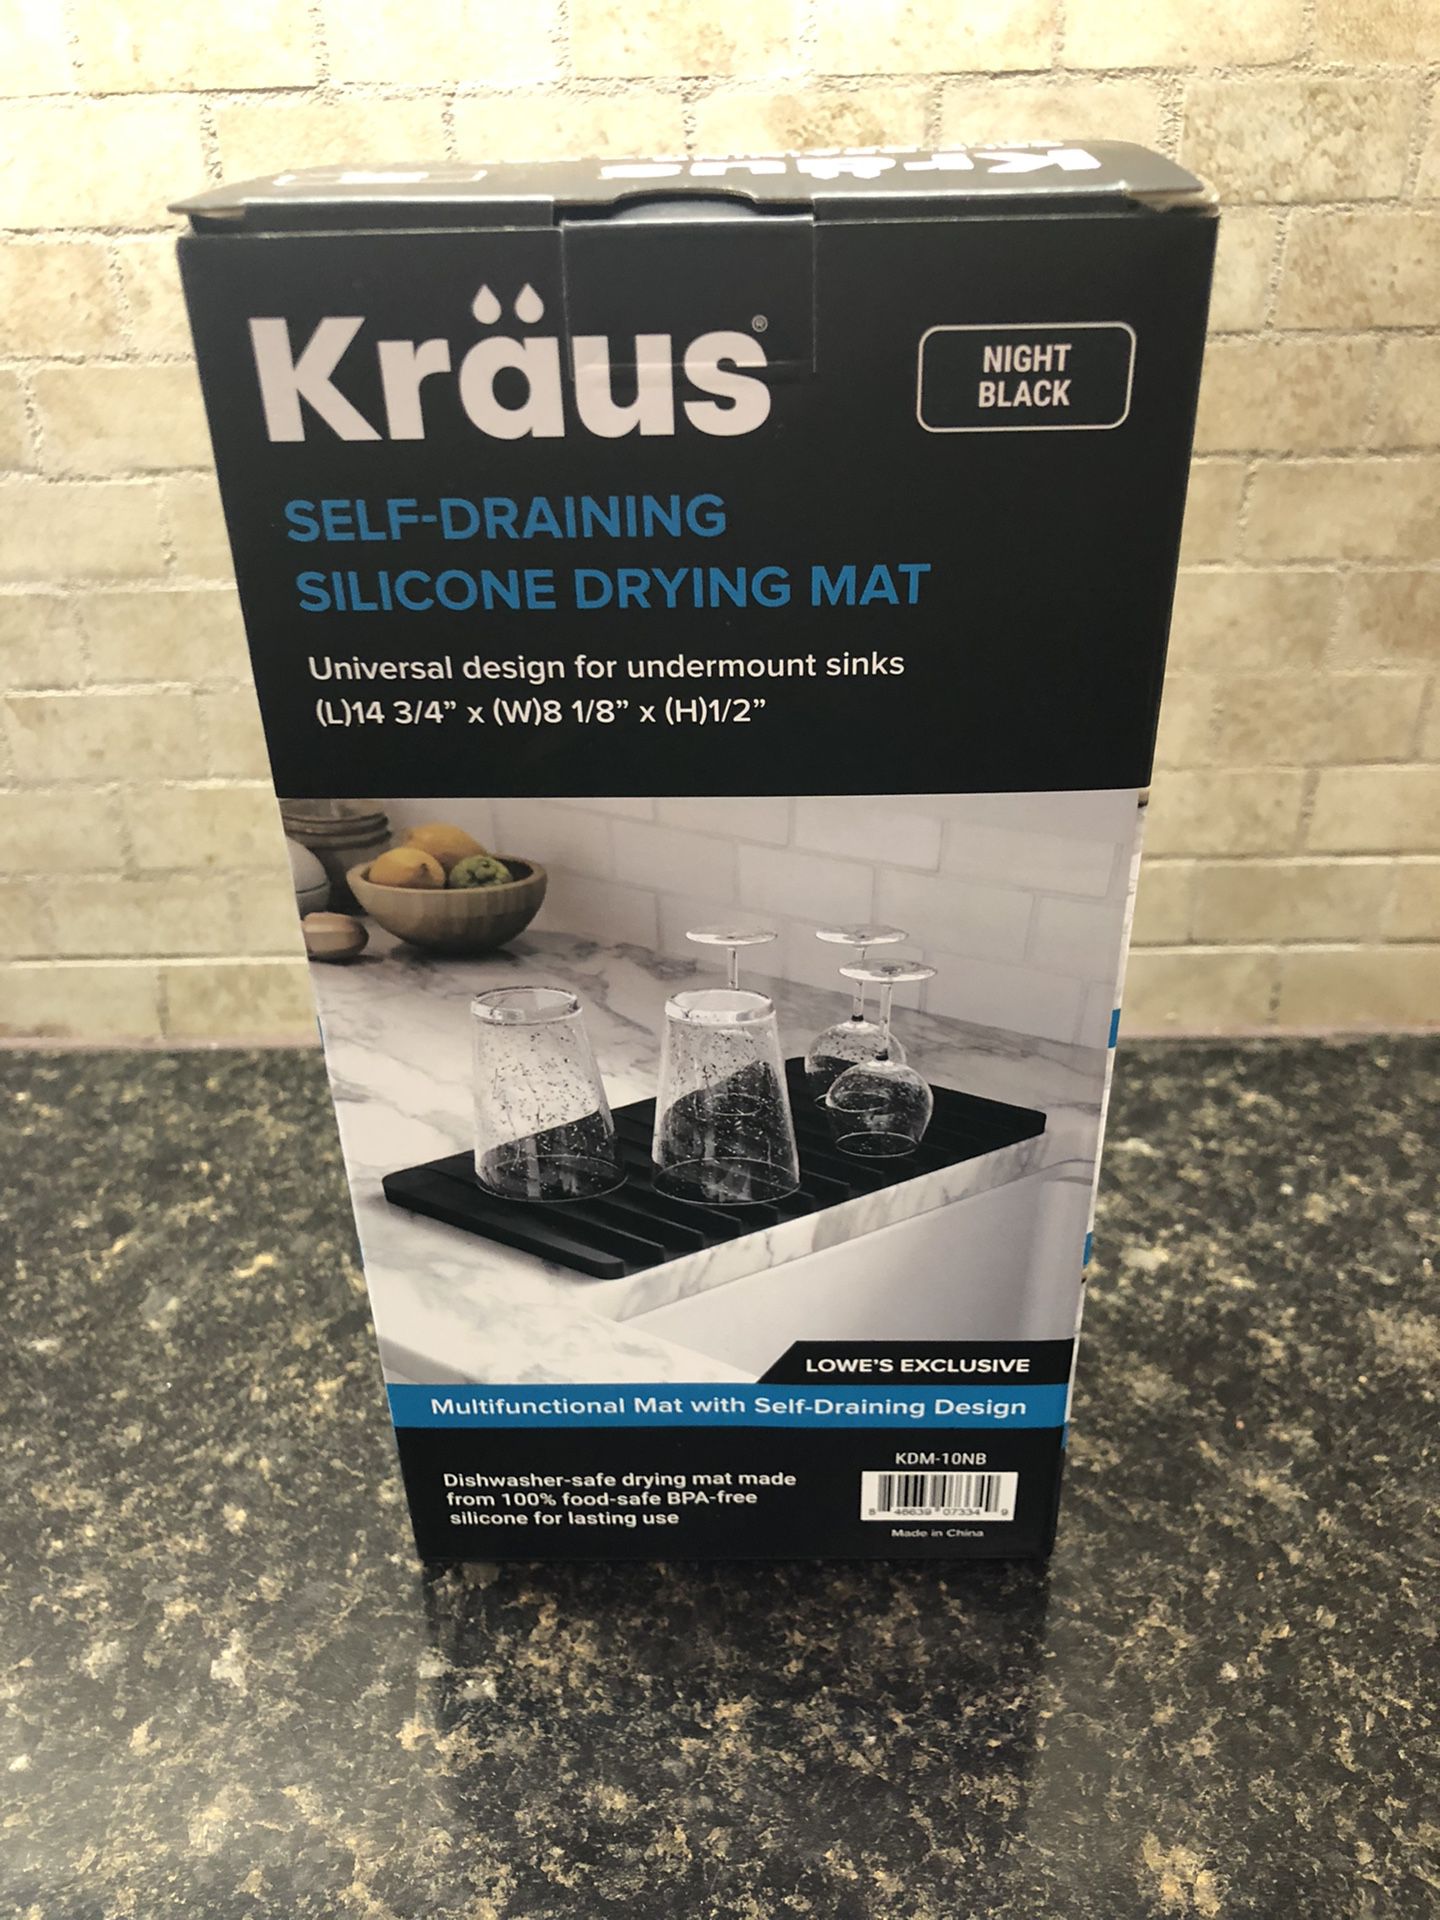 Kraus Self-Draining Silicone Drying Mat Night Black 14-3/4 x 8-1